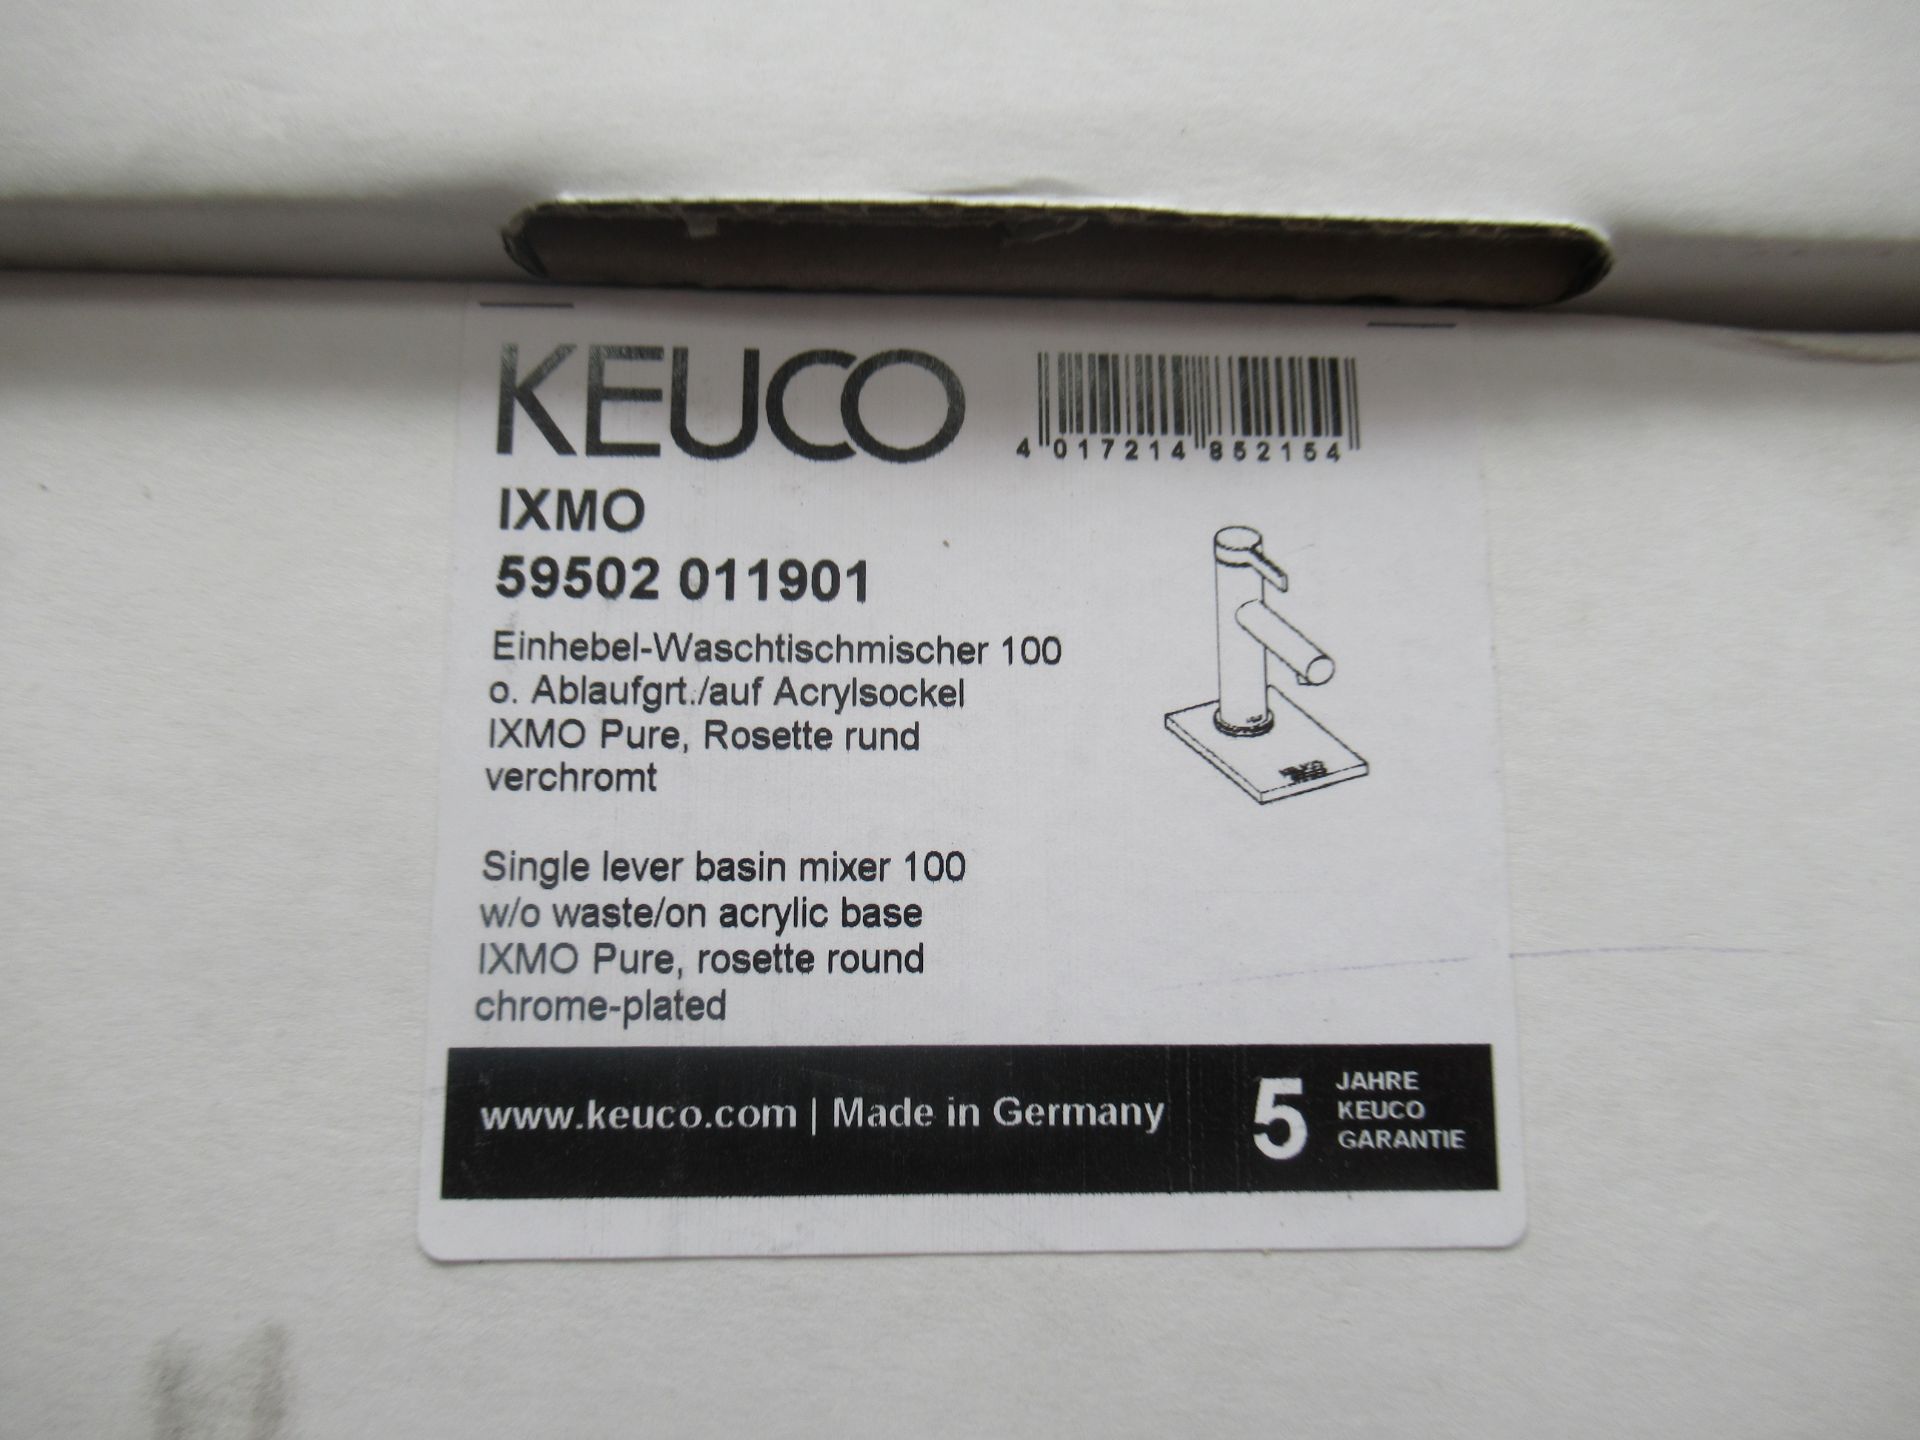 2 x Keuco IXMO Single Lever Basin Mixer 100-Tap, Chrome Plated, P/N 59502-011901 - Image 2 of 3